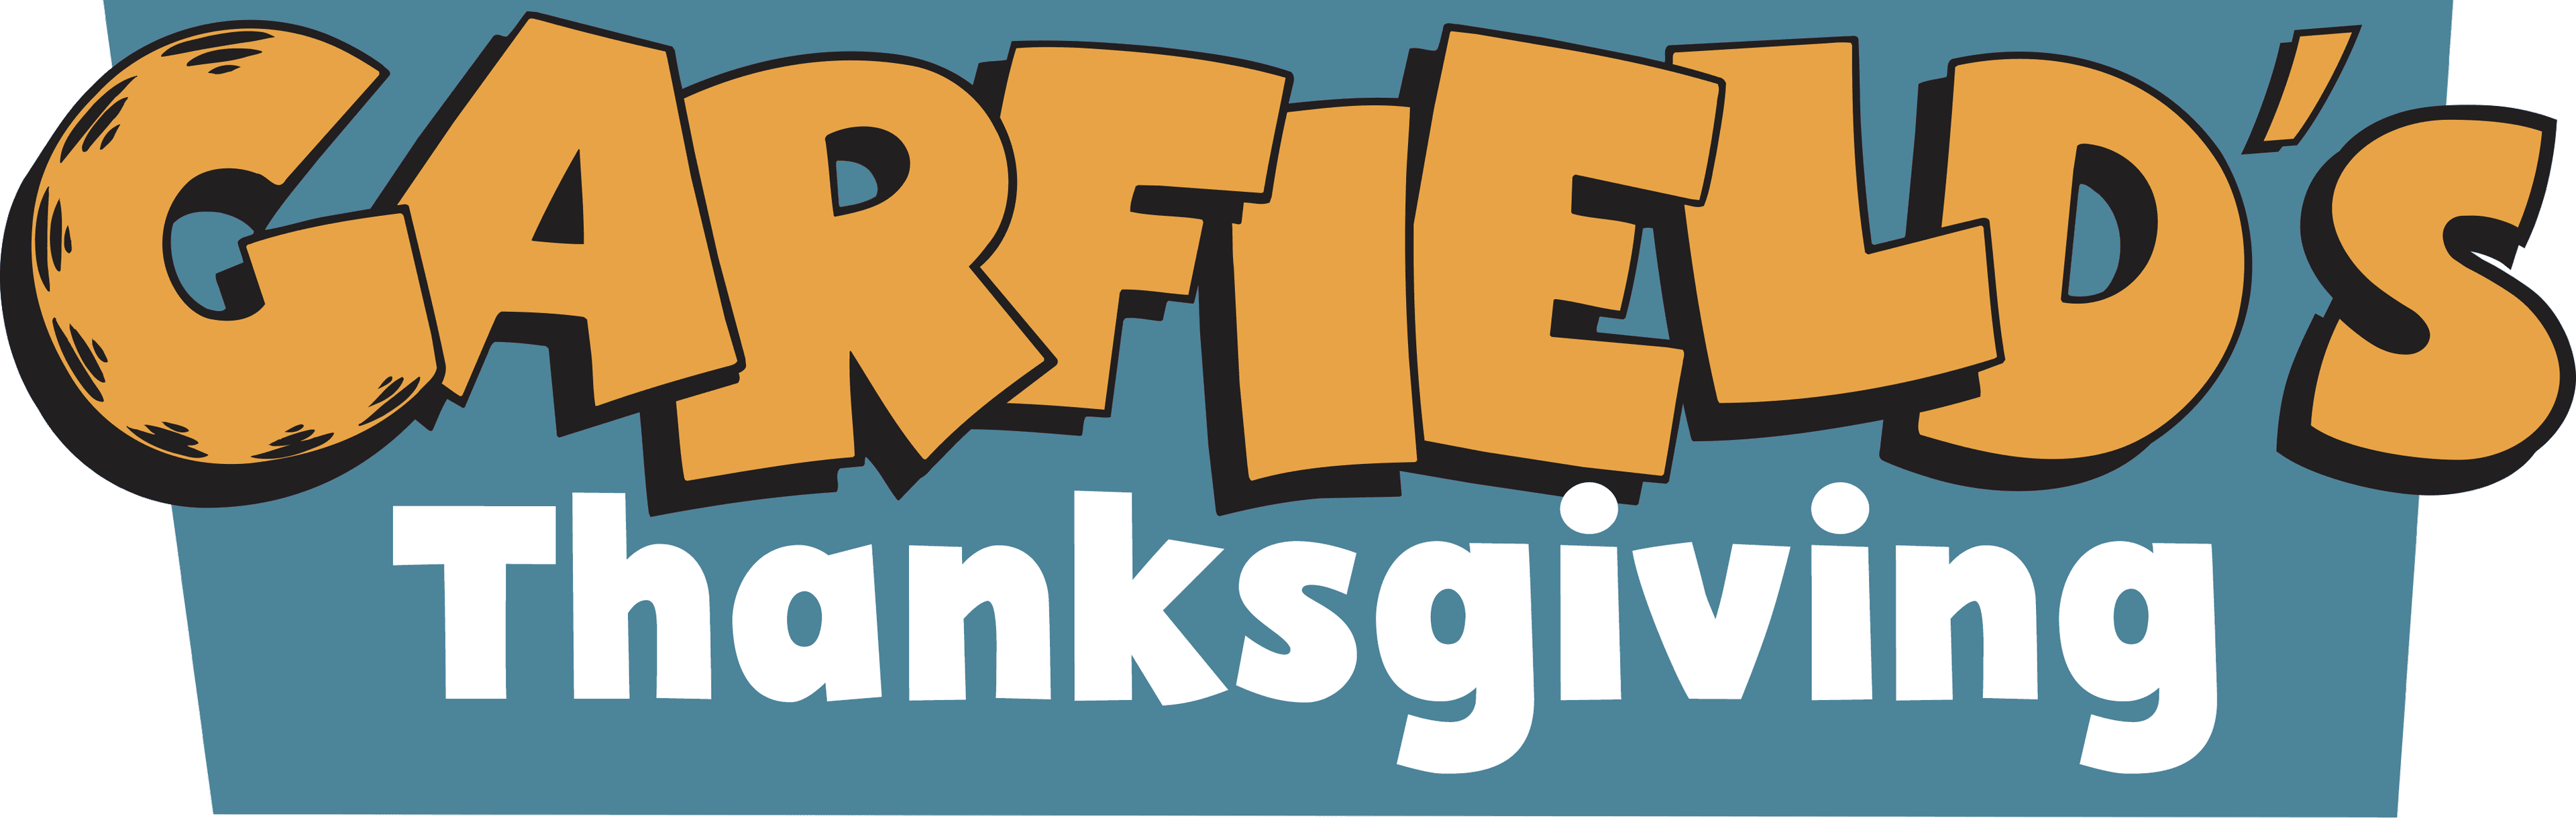 Garfield's Thanksgiving logo